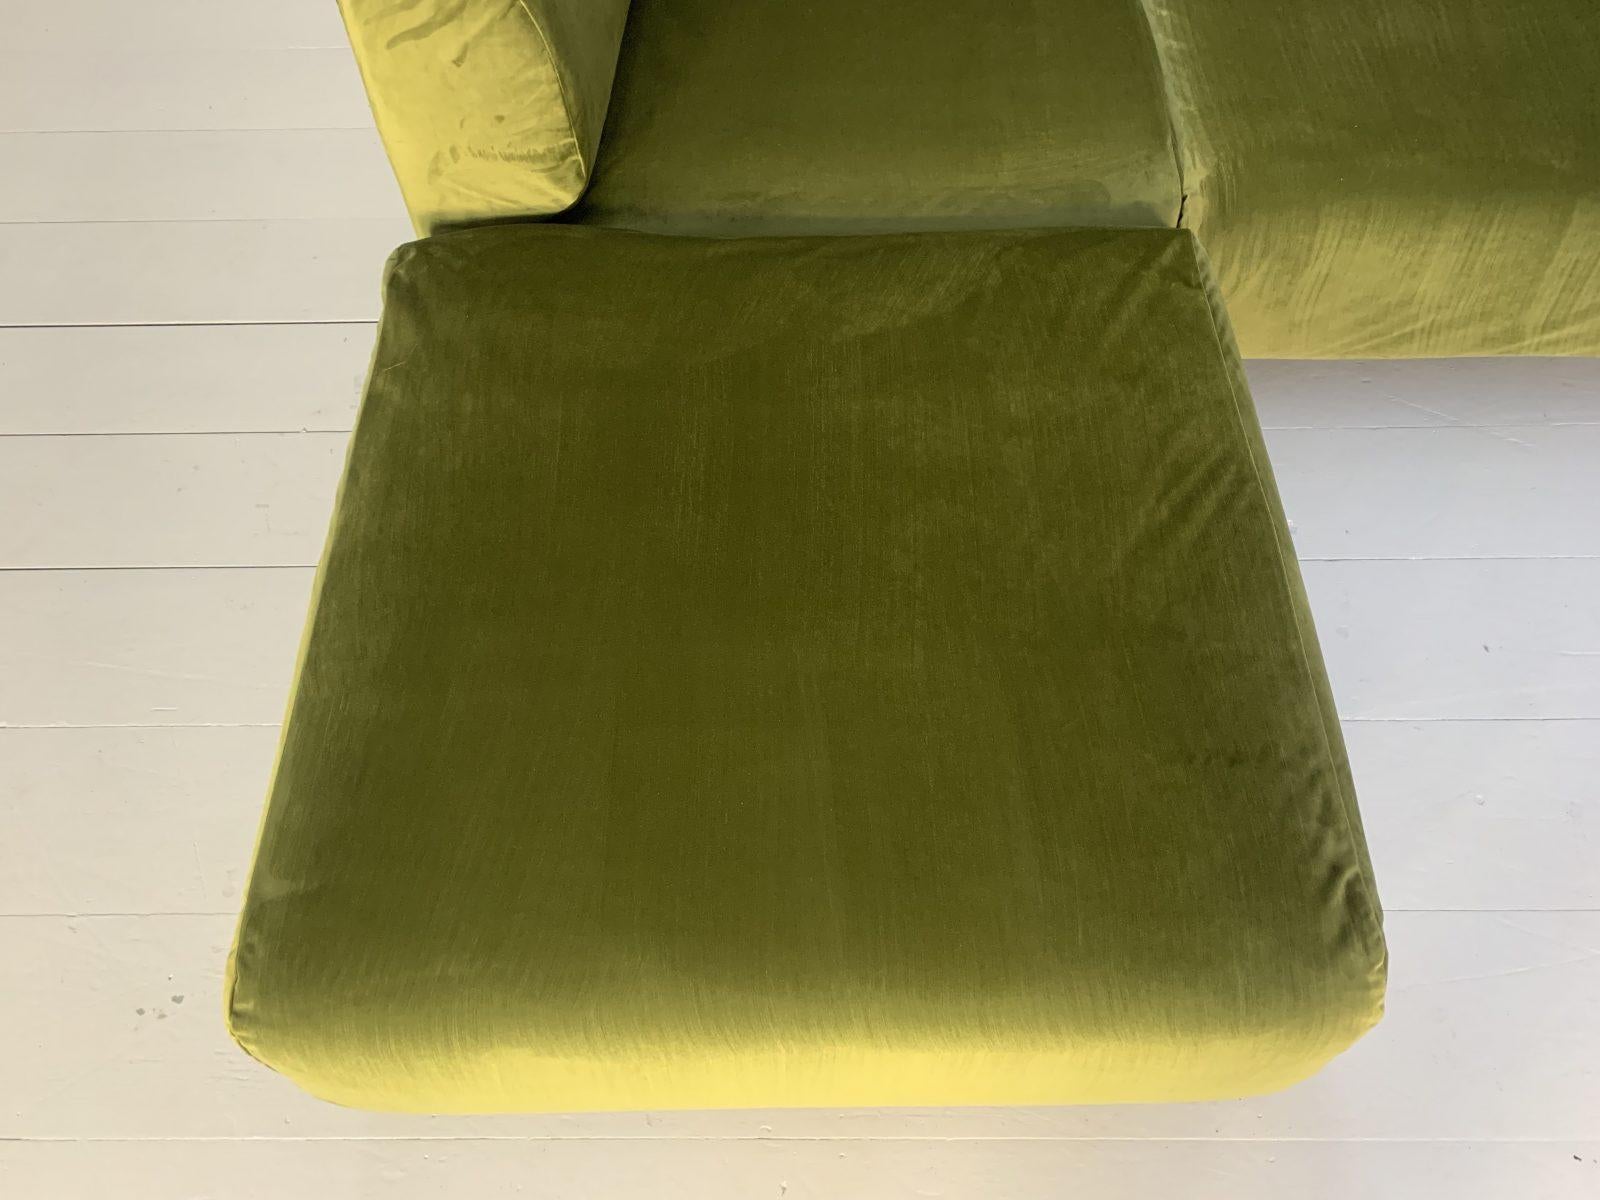 Cassina “250 Met” L-Shape Sofa in Green Velvet In Good Condition For Sale In Barrowford, GB